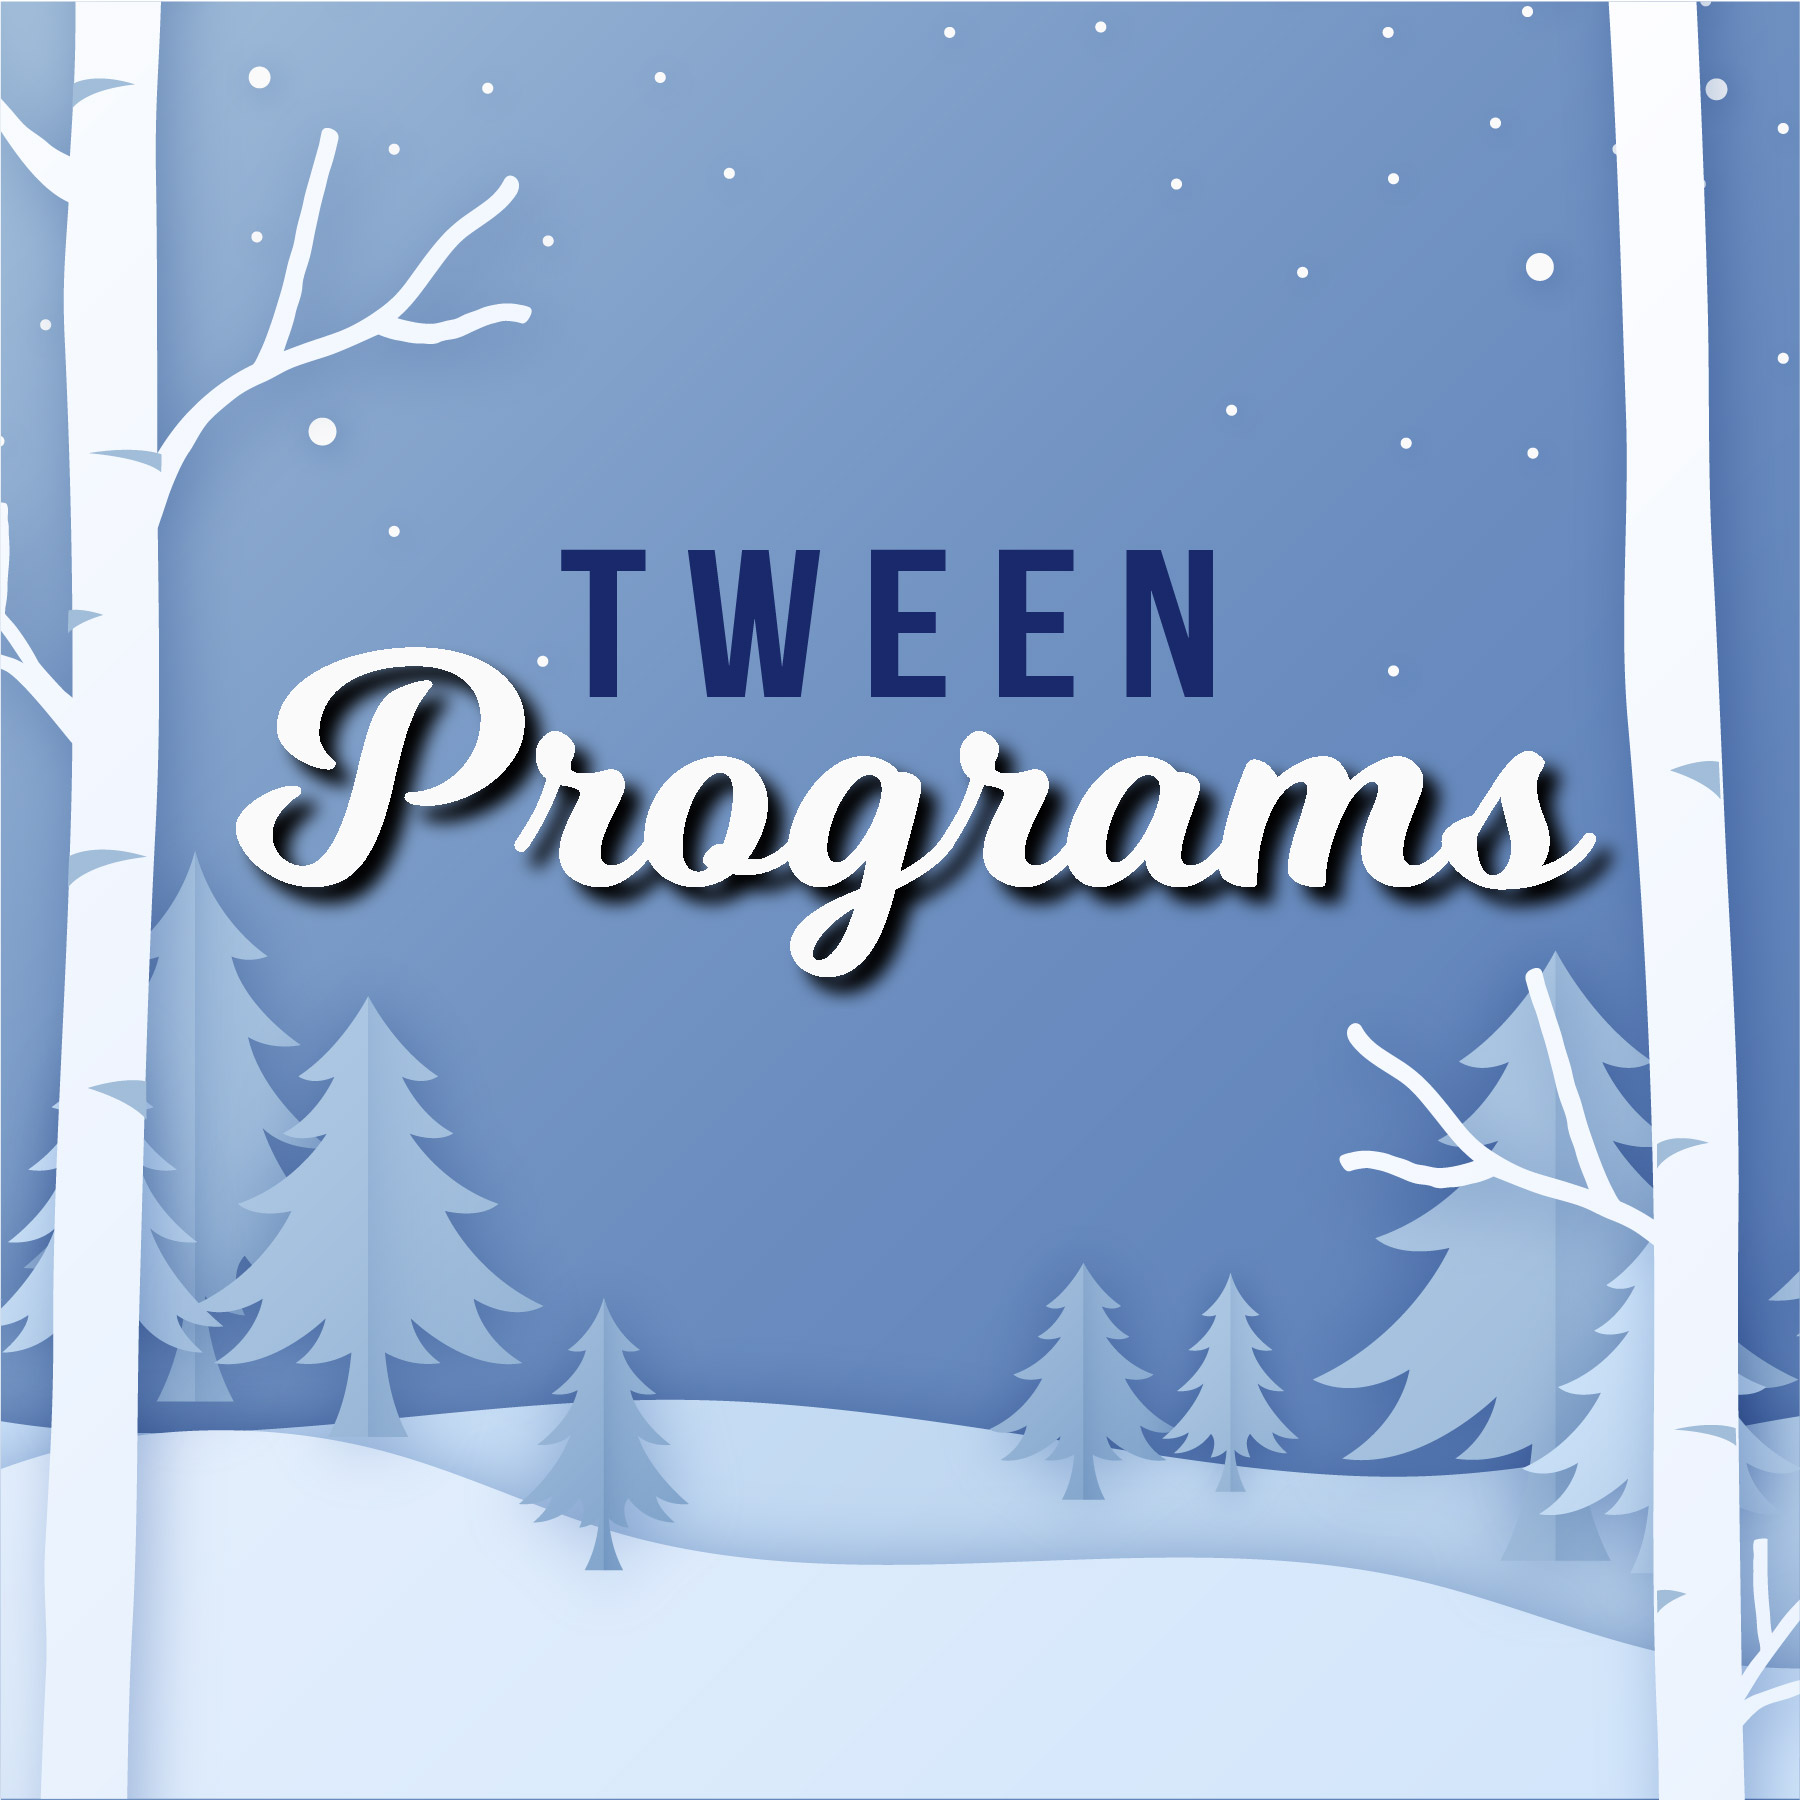 Tween Programs Graphic with Winter Background